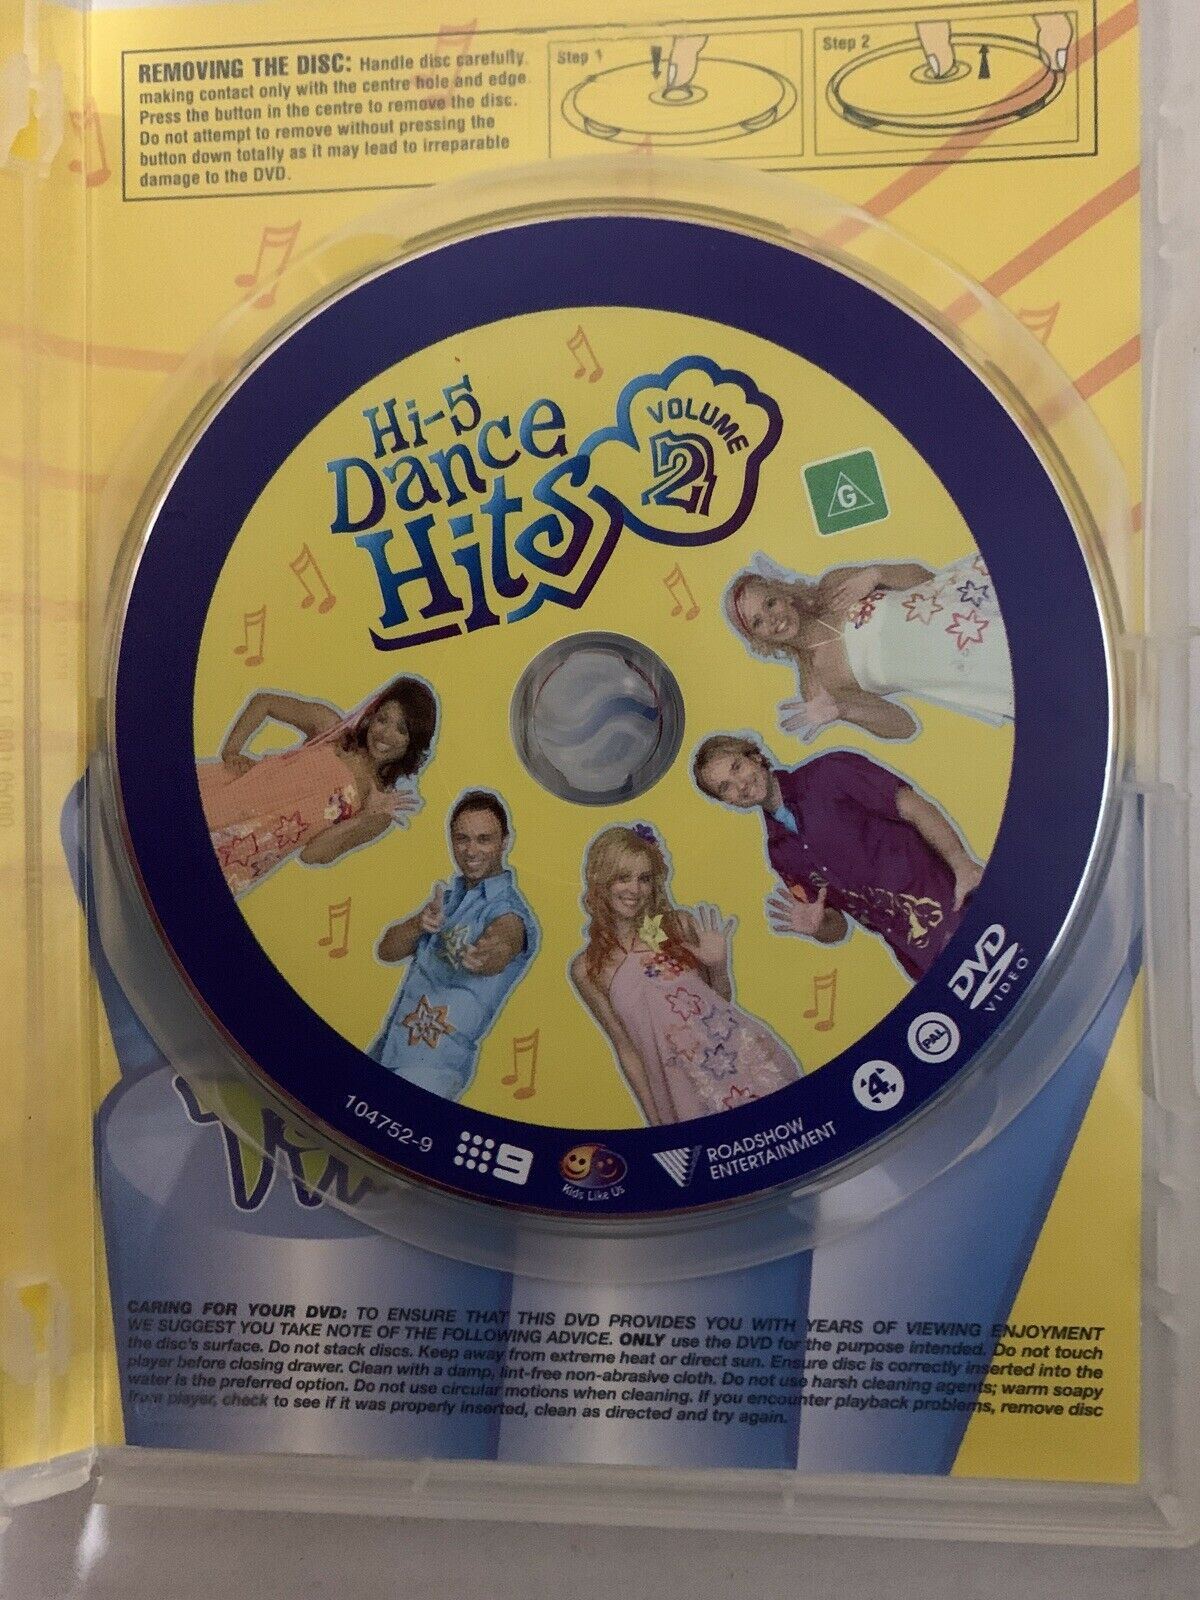 Hi-5 Dance Hits - Volume 2 (DVD, 2005) Region 4